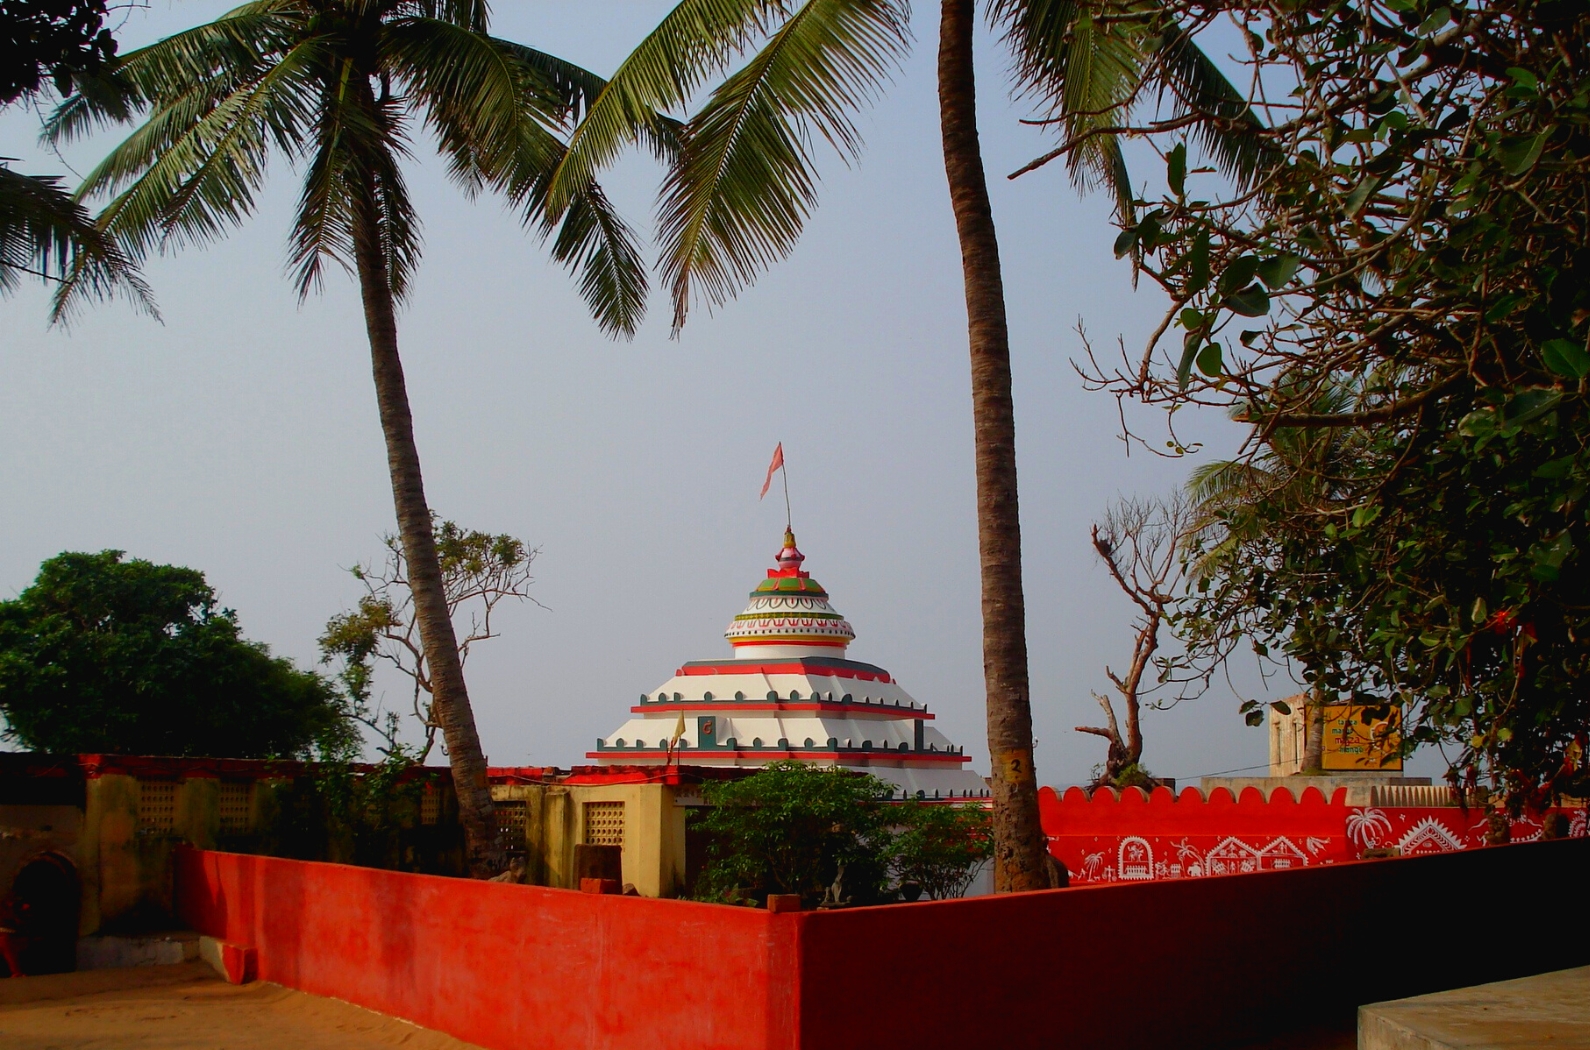 Ramachandi Temple